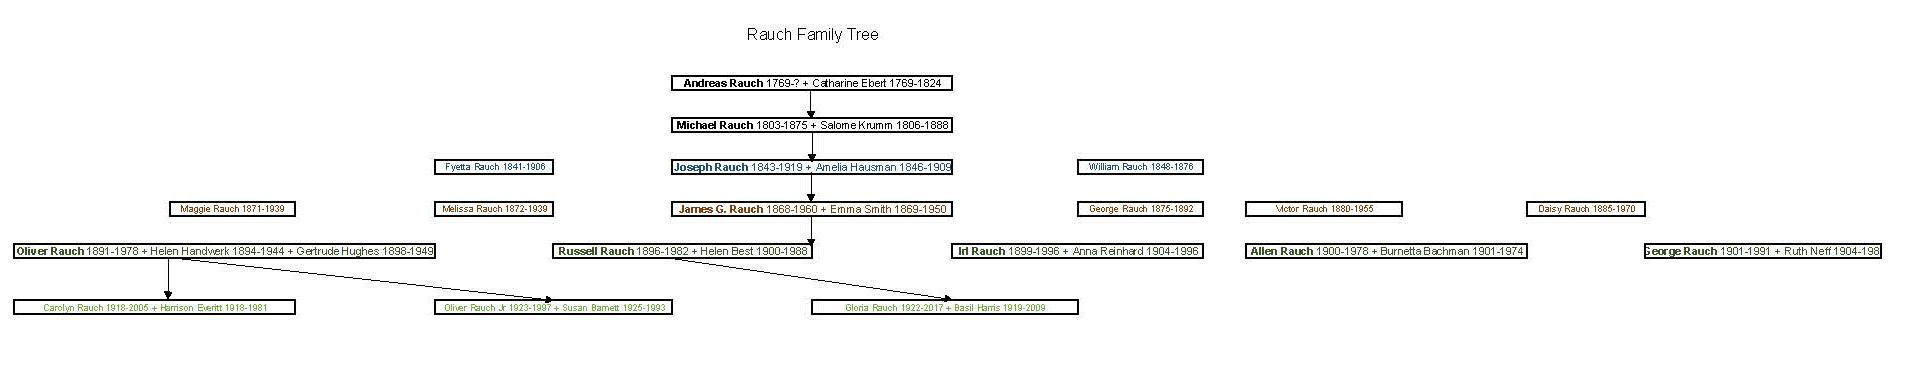 Rauch Genealogy